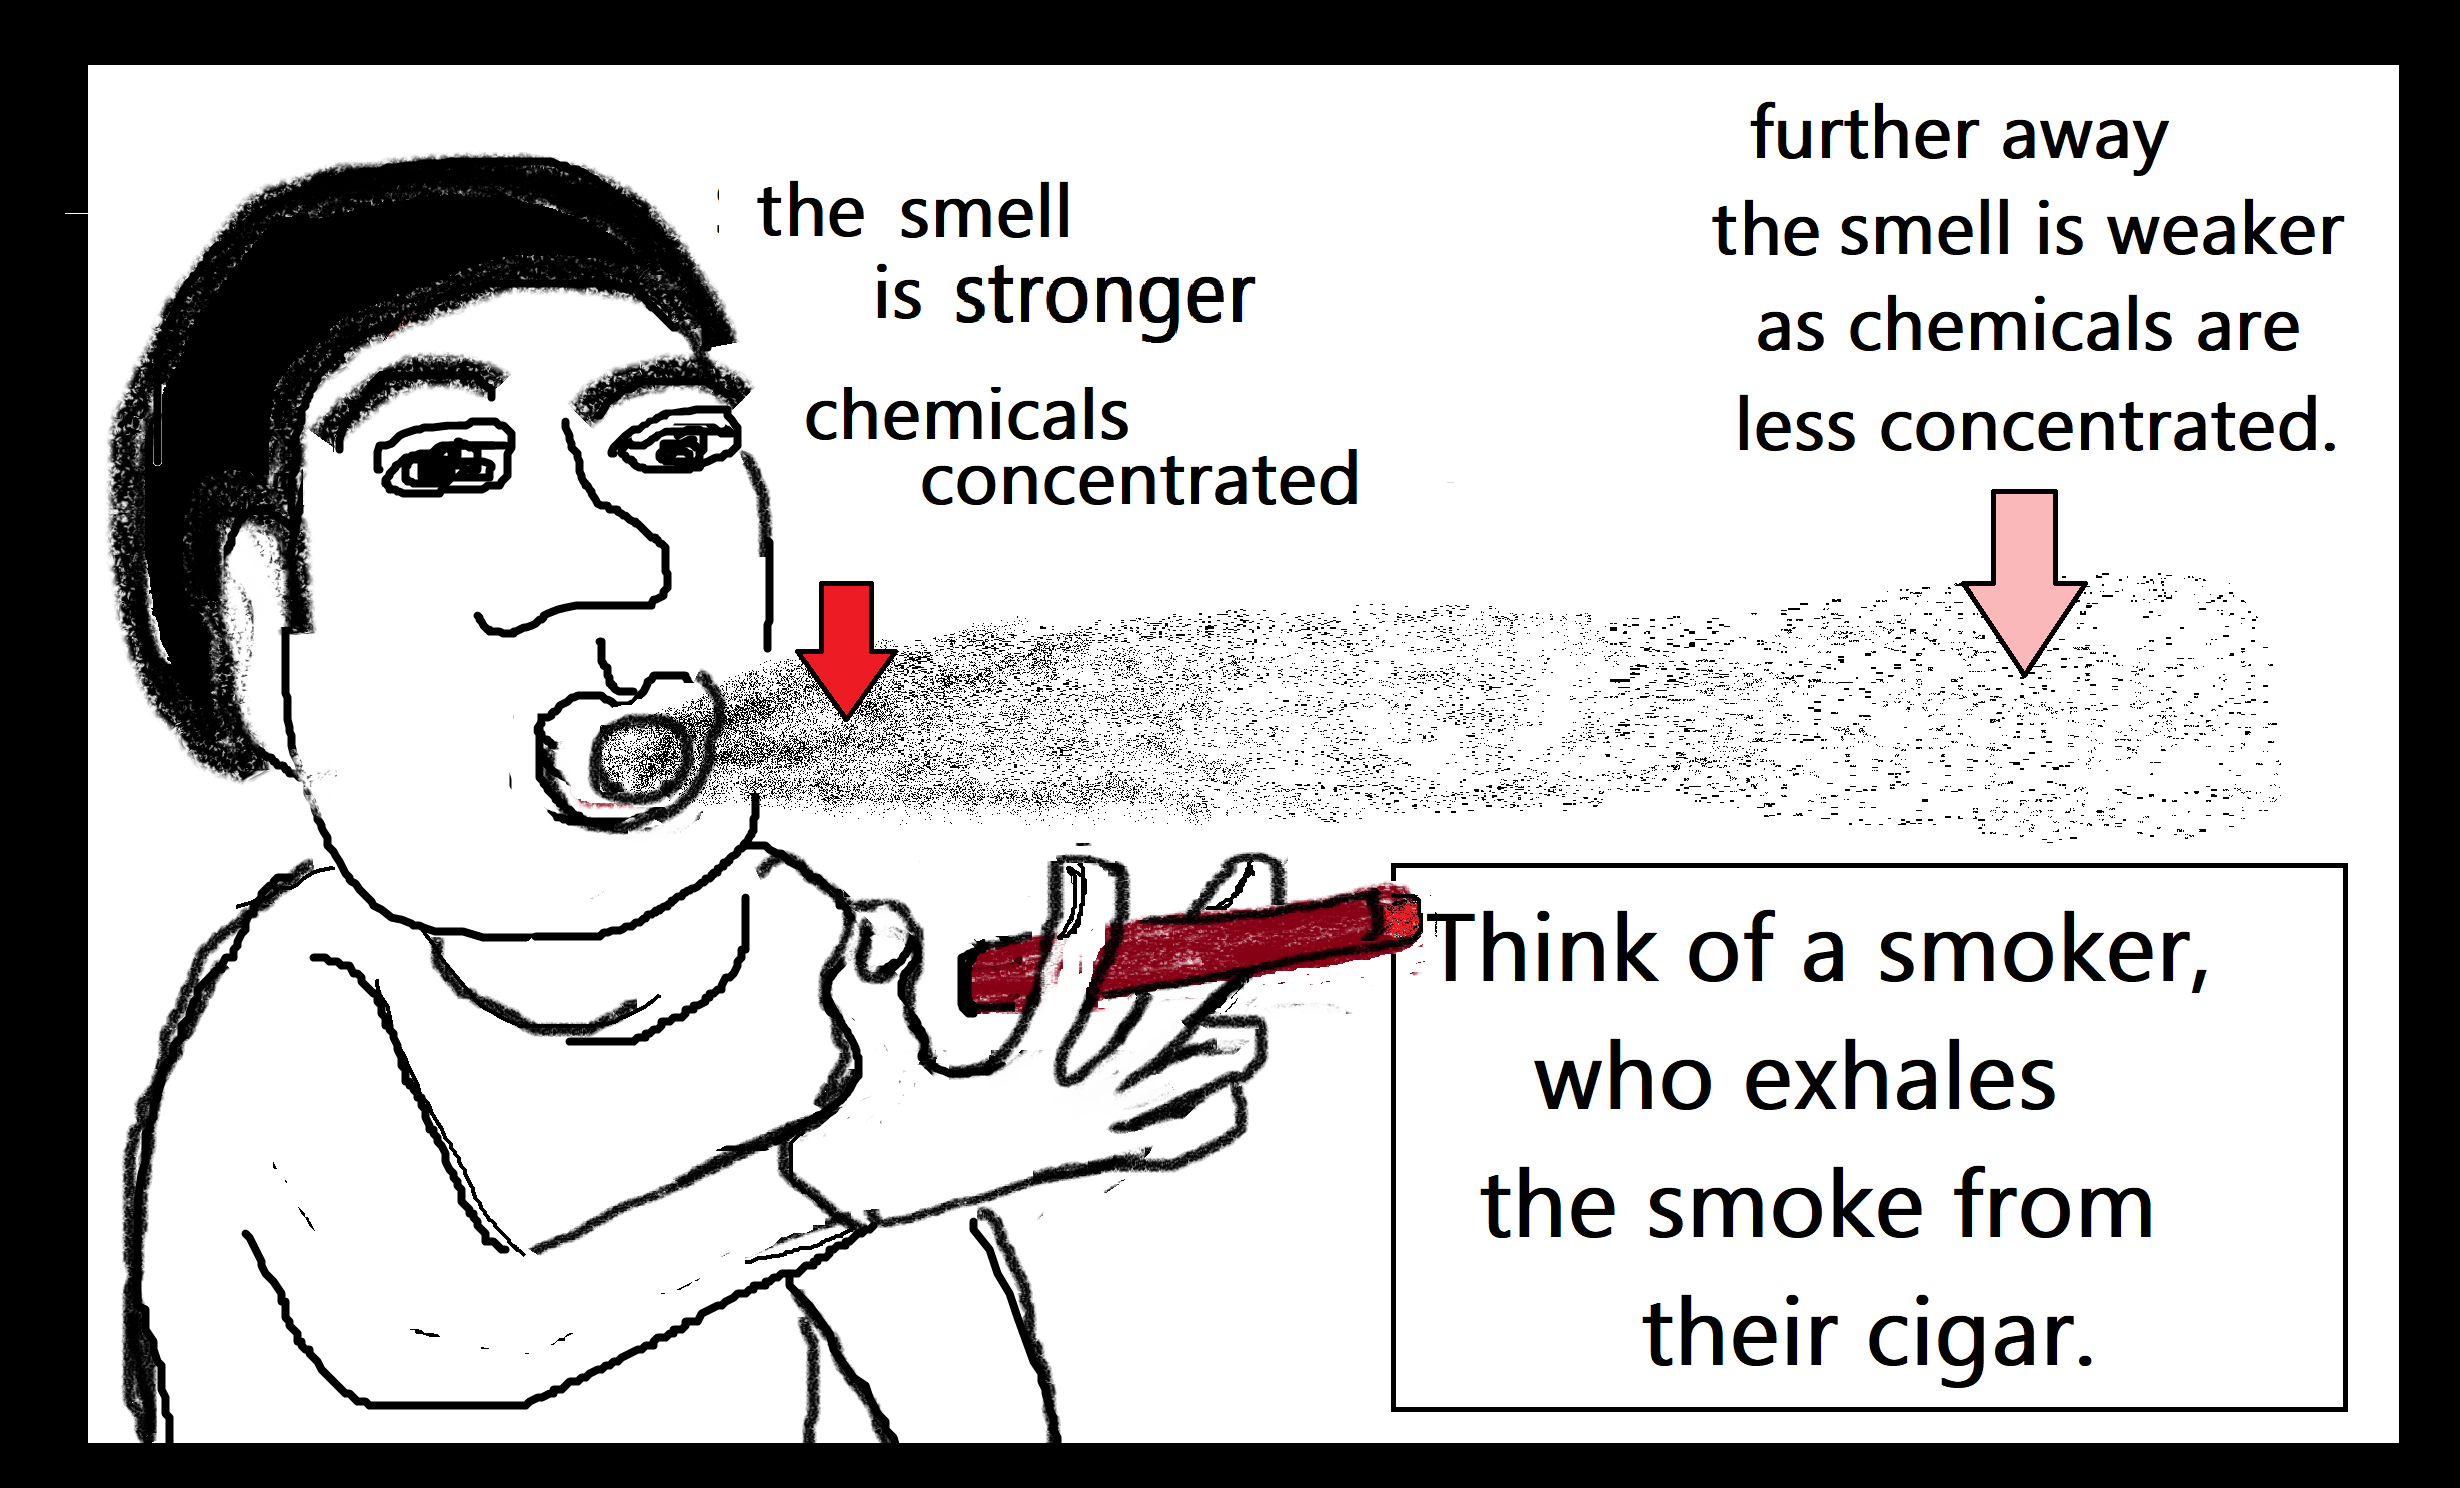 smoker who exhales